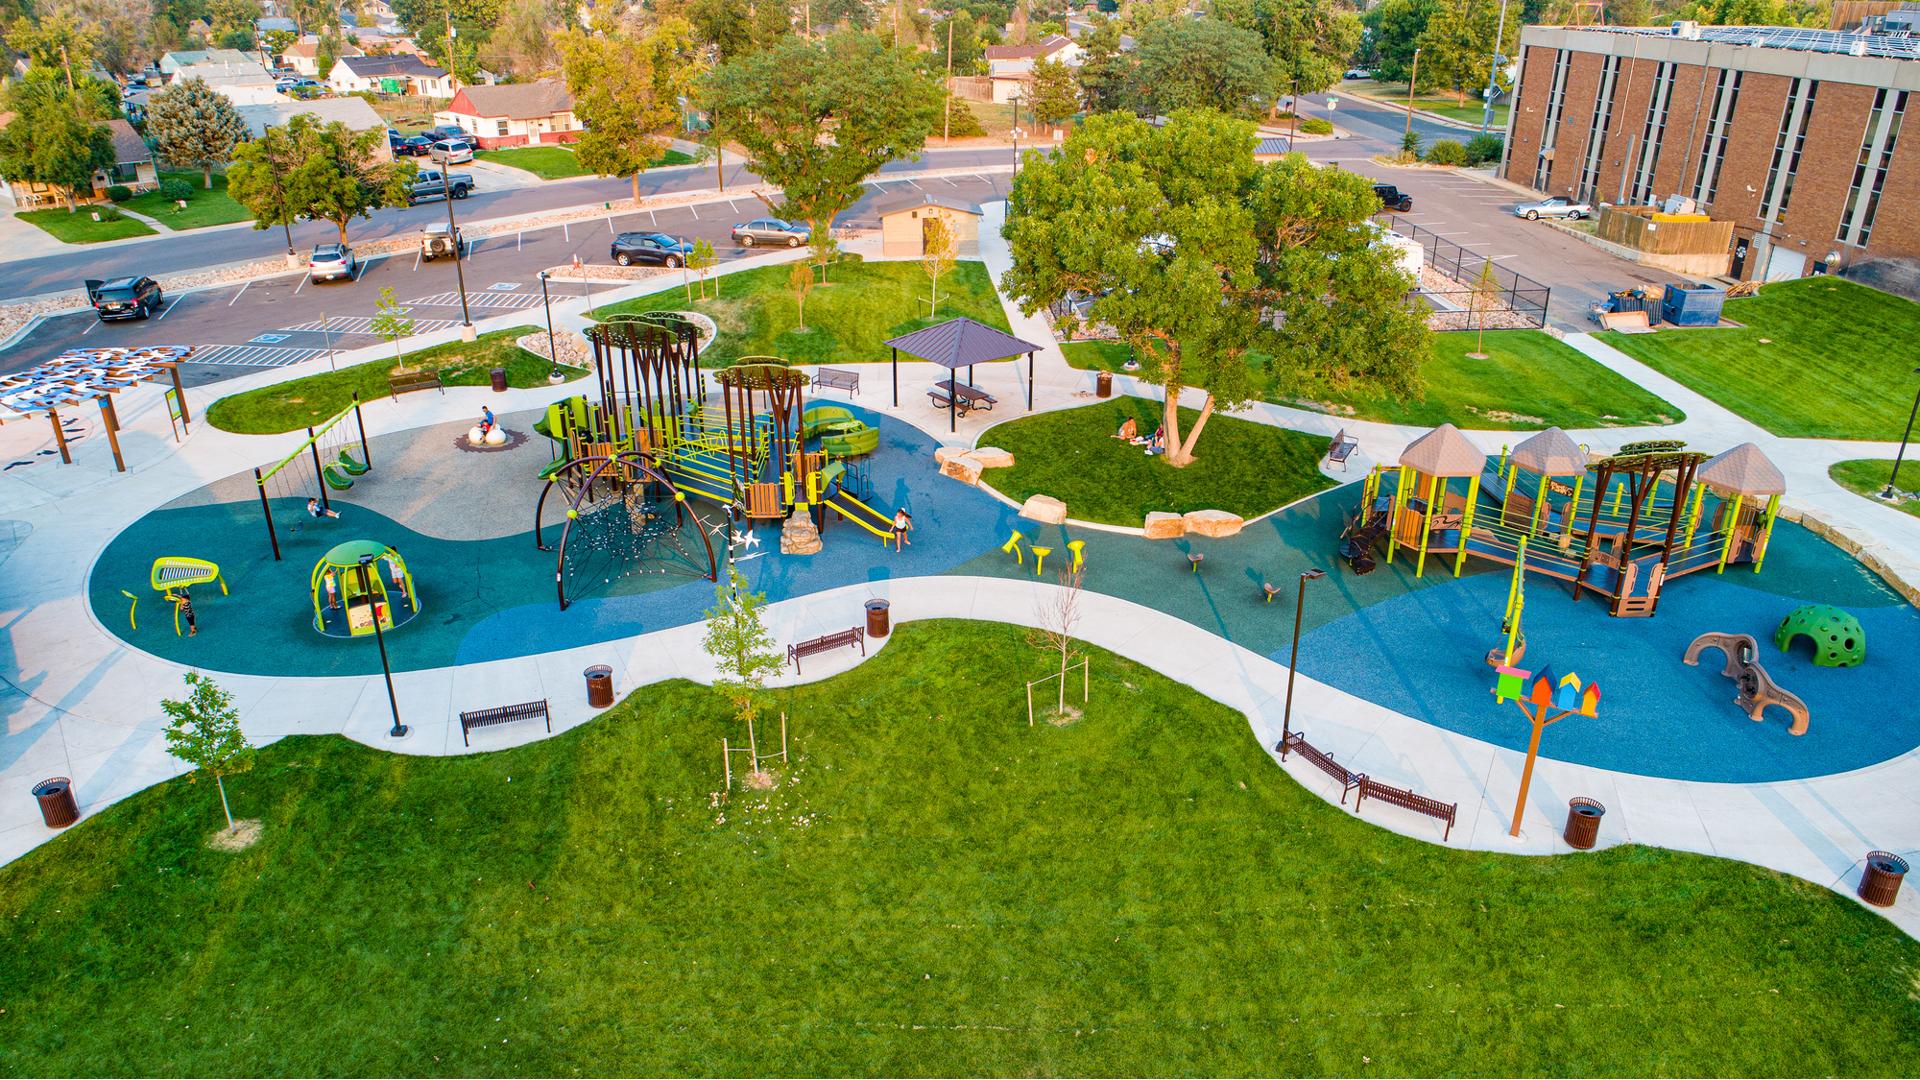 Veterans Memorial Park NatureInspired Inclusive Playground for All!